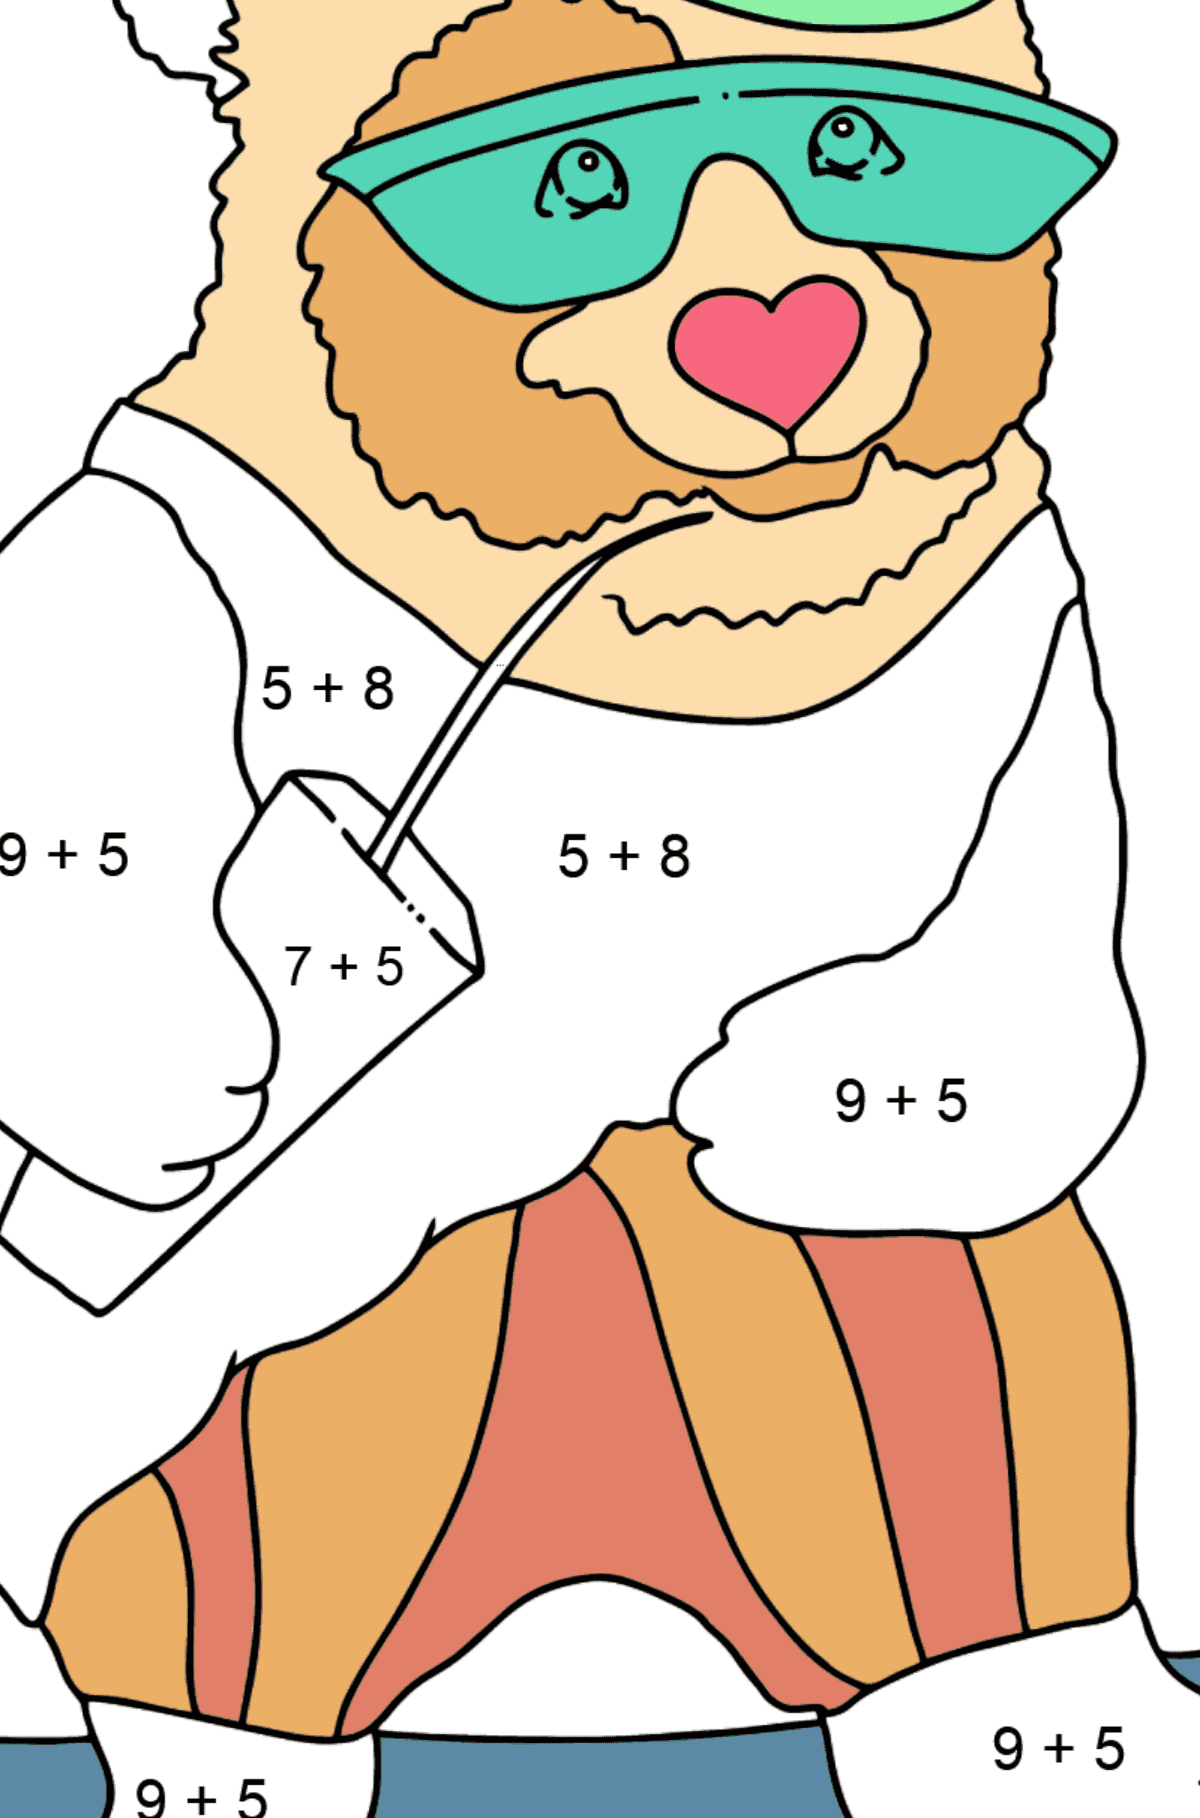 Dibujo de Panda Divertido para colorear - Colorear con Matemáticas - Sumas para Niños